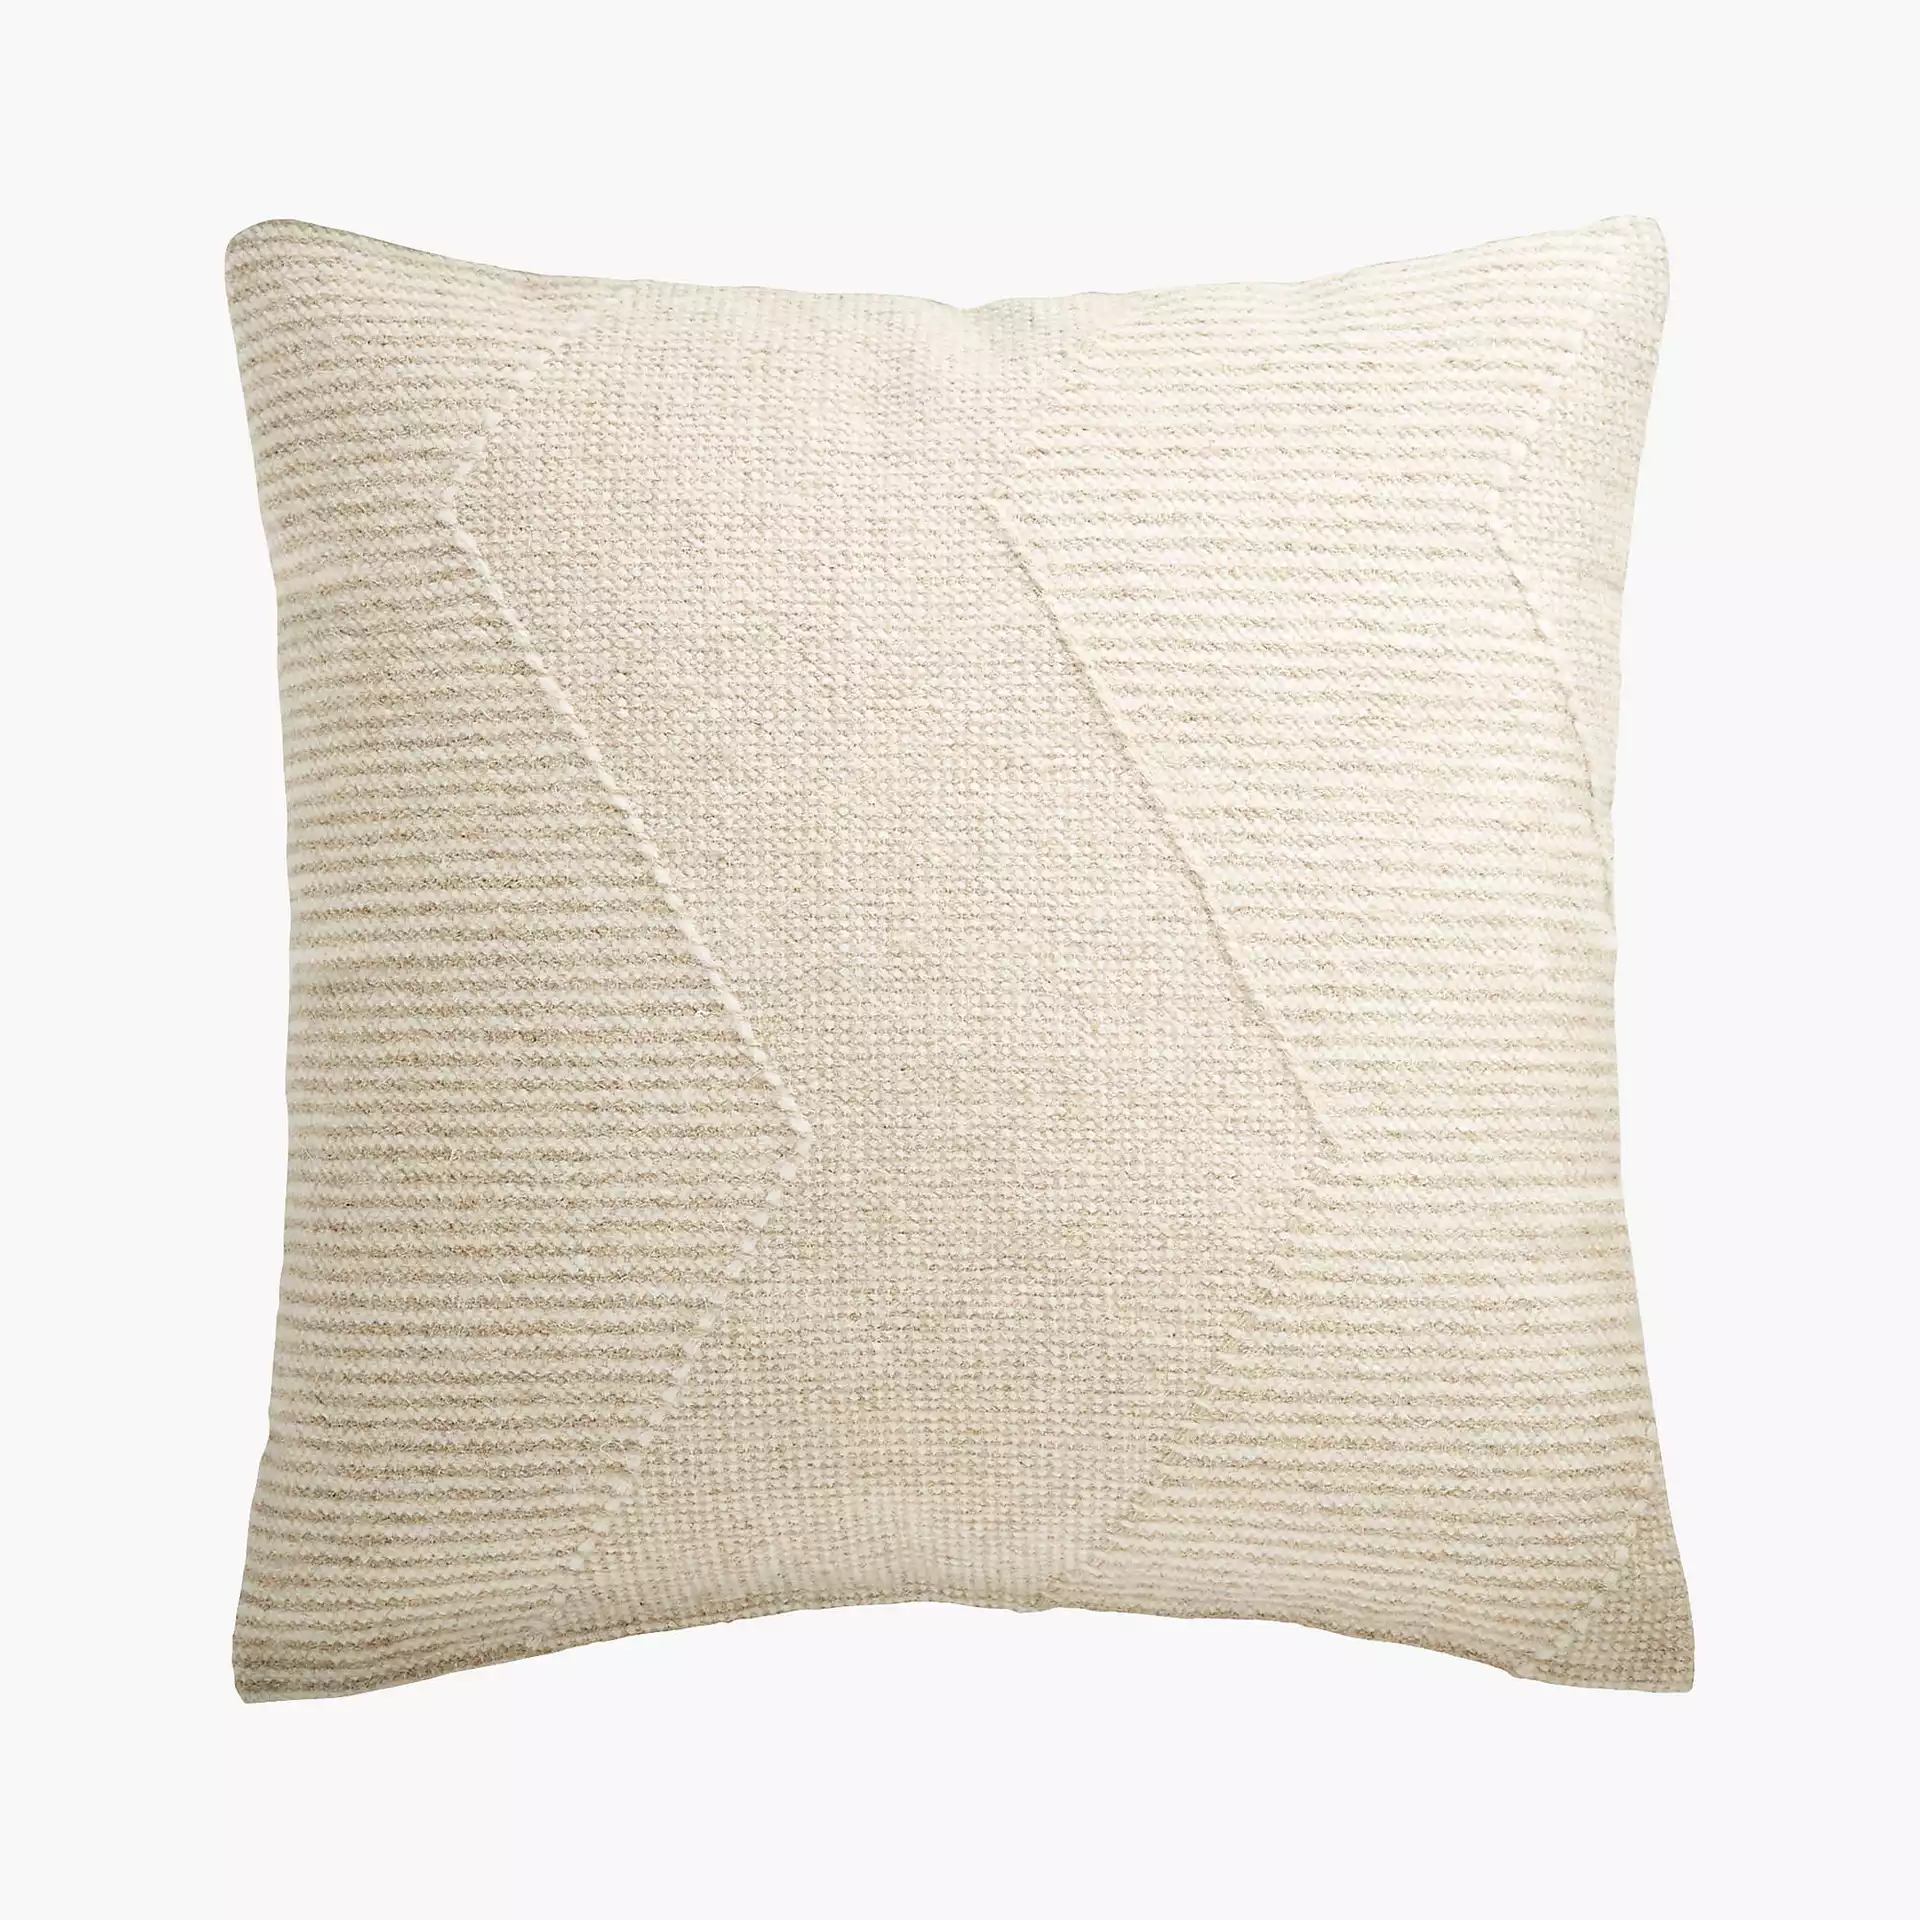 Bias Pillow, Feather-Down Insert, Natural, 23" x 23"